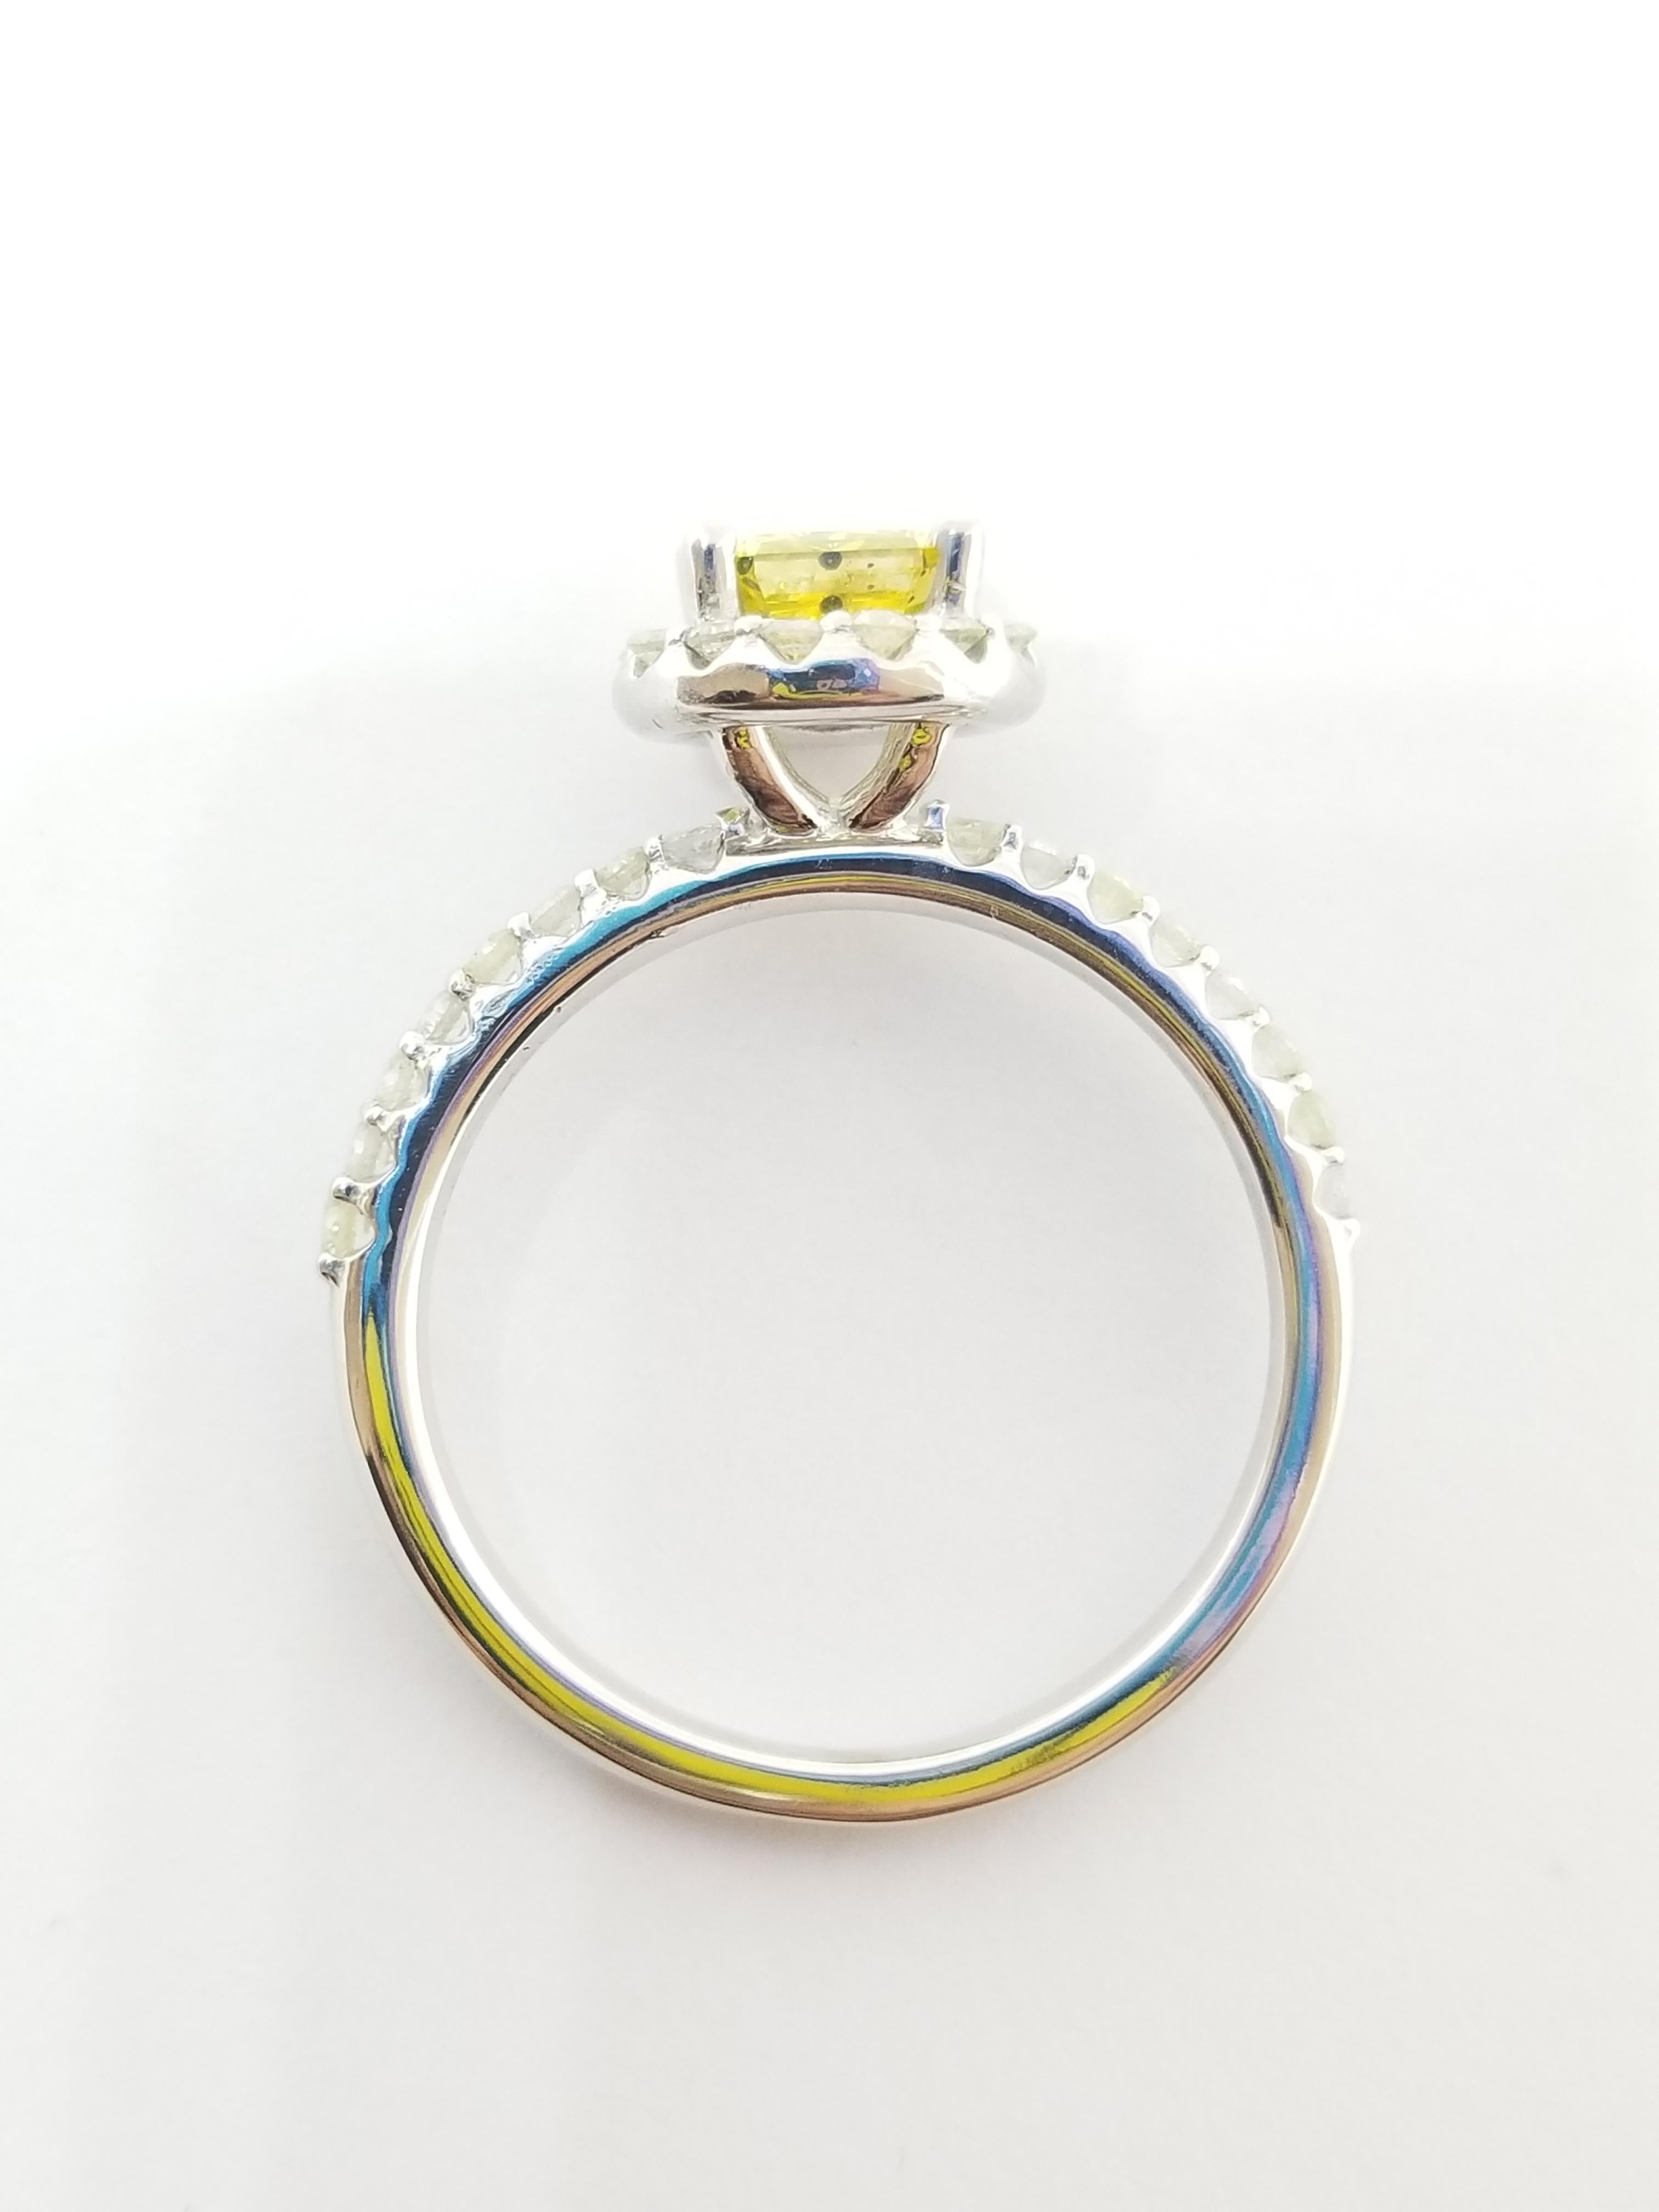 Radiant Cut GIA 0.78 Carat Fancy Vivid Yellow Radiant Diamond Ring 14K White Gold For Sale